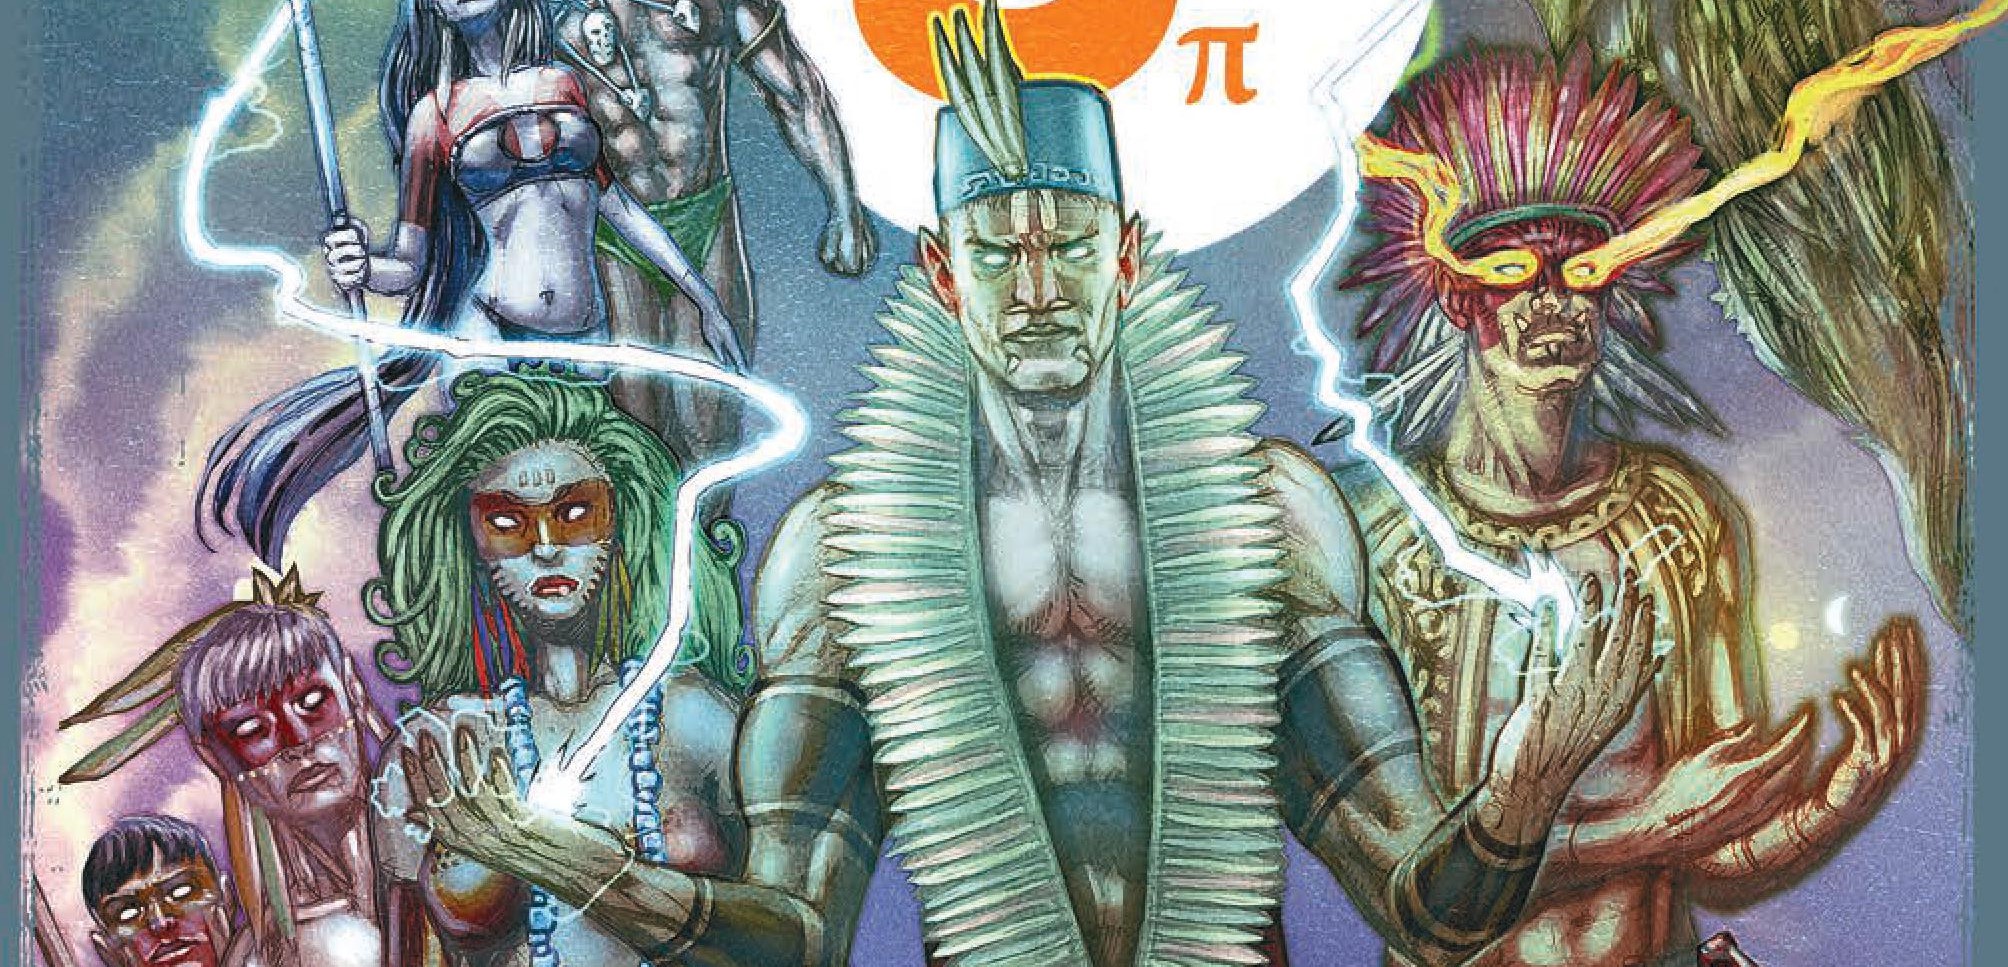 8 pi - Nova HQ com deuses indígenas desbanca heróis convencionais